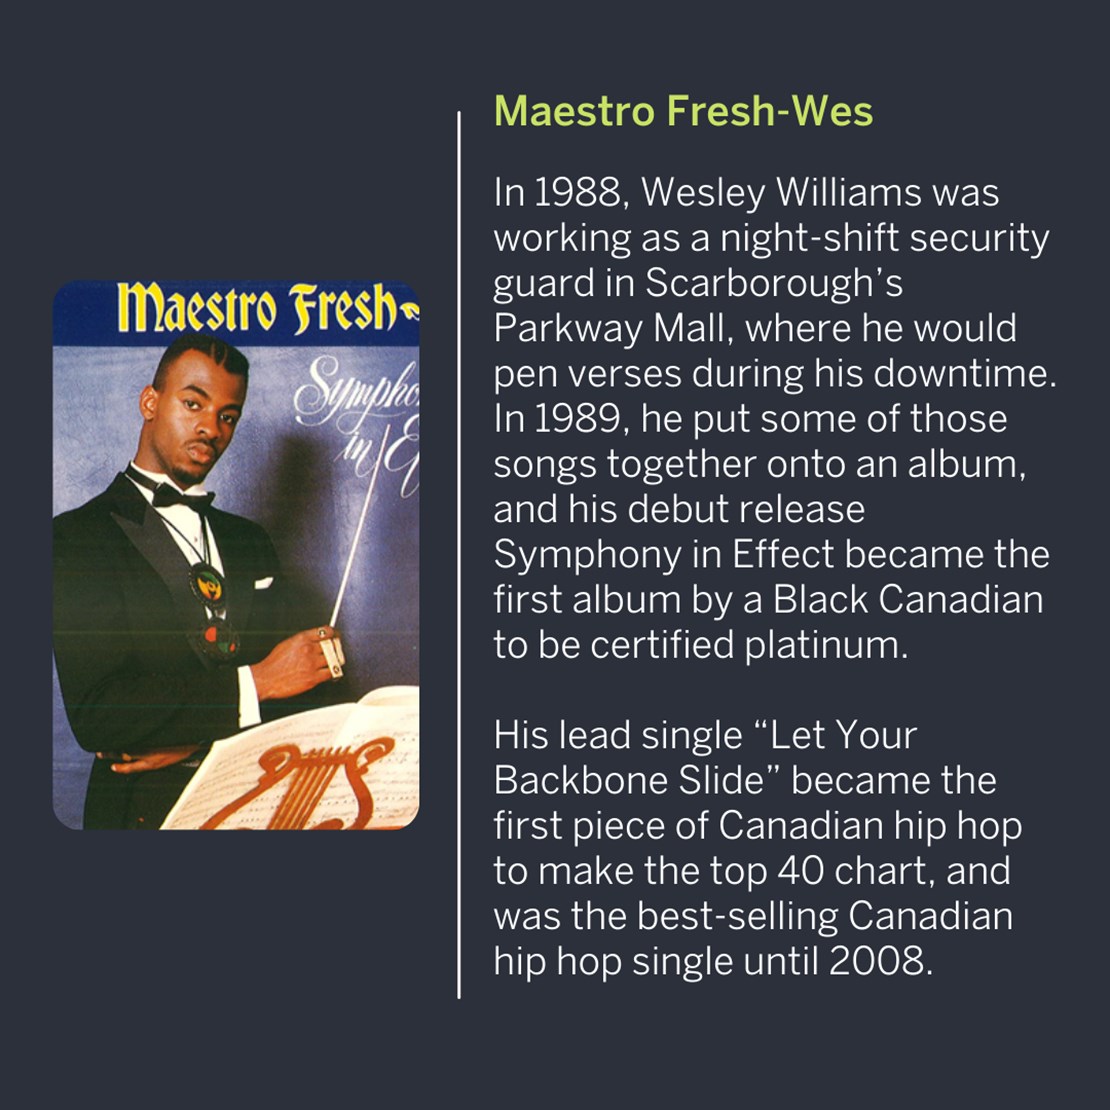 Maestro Fresh-Wes